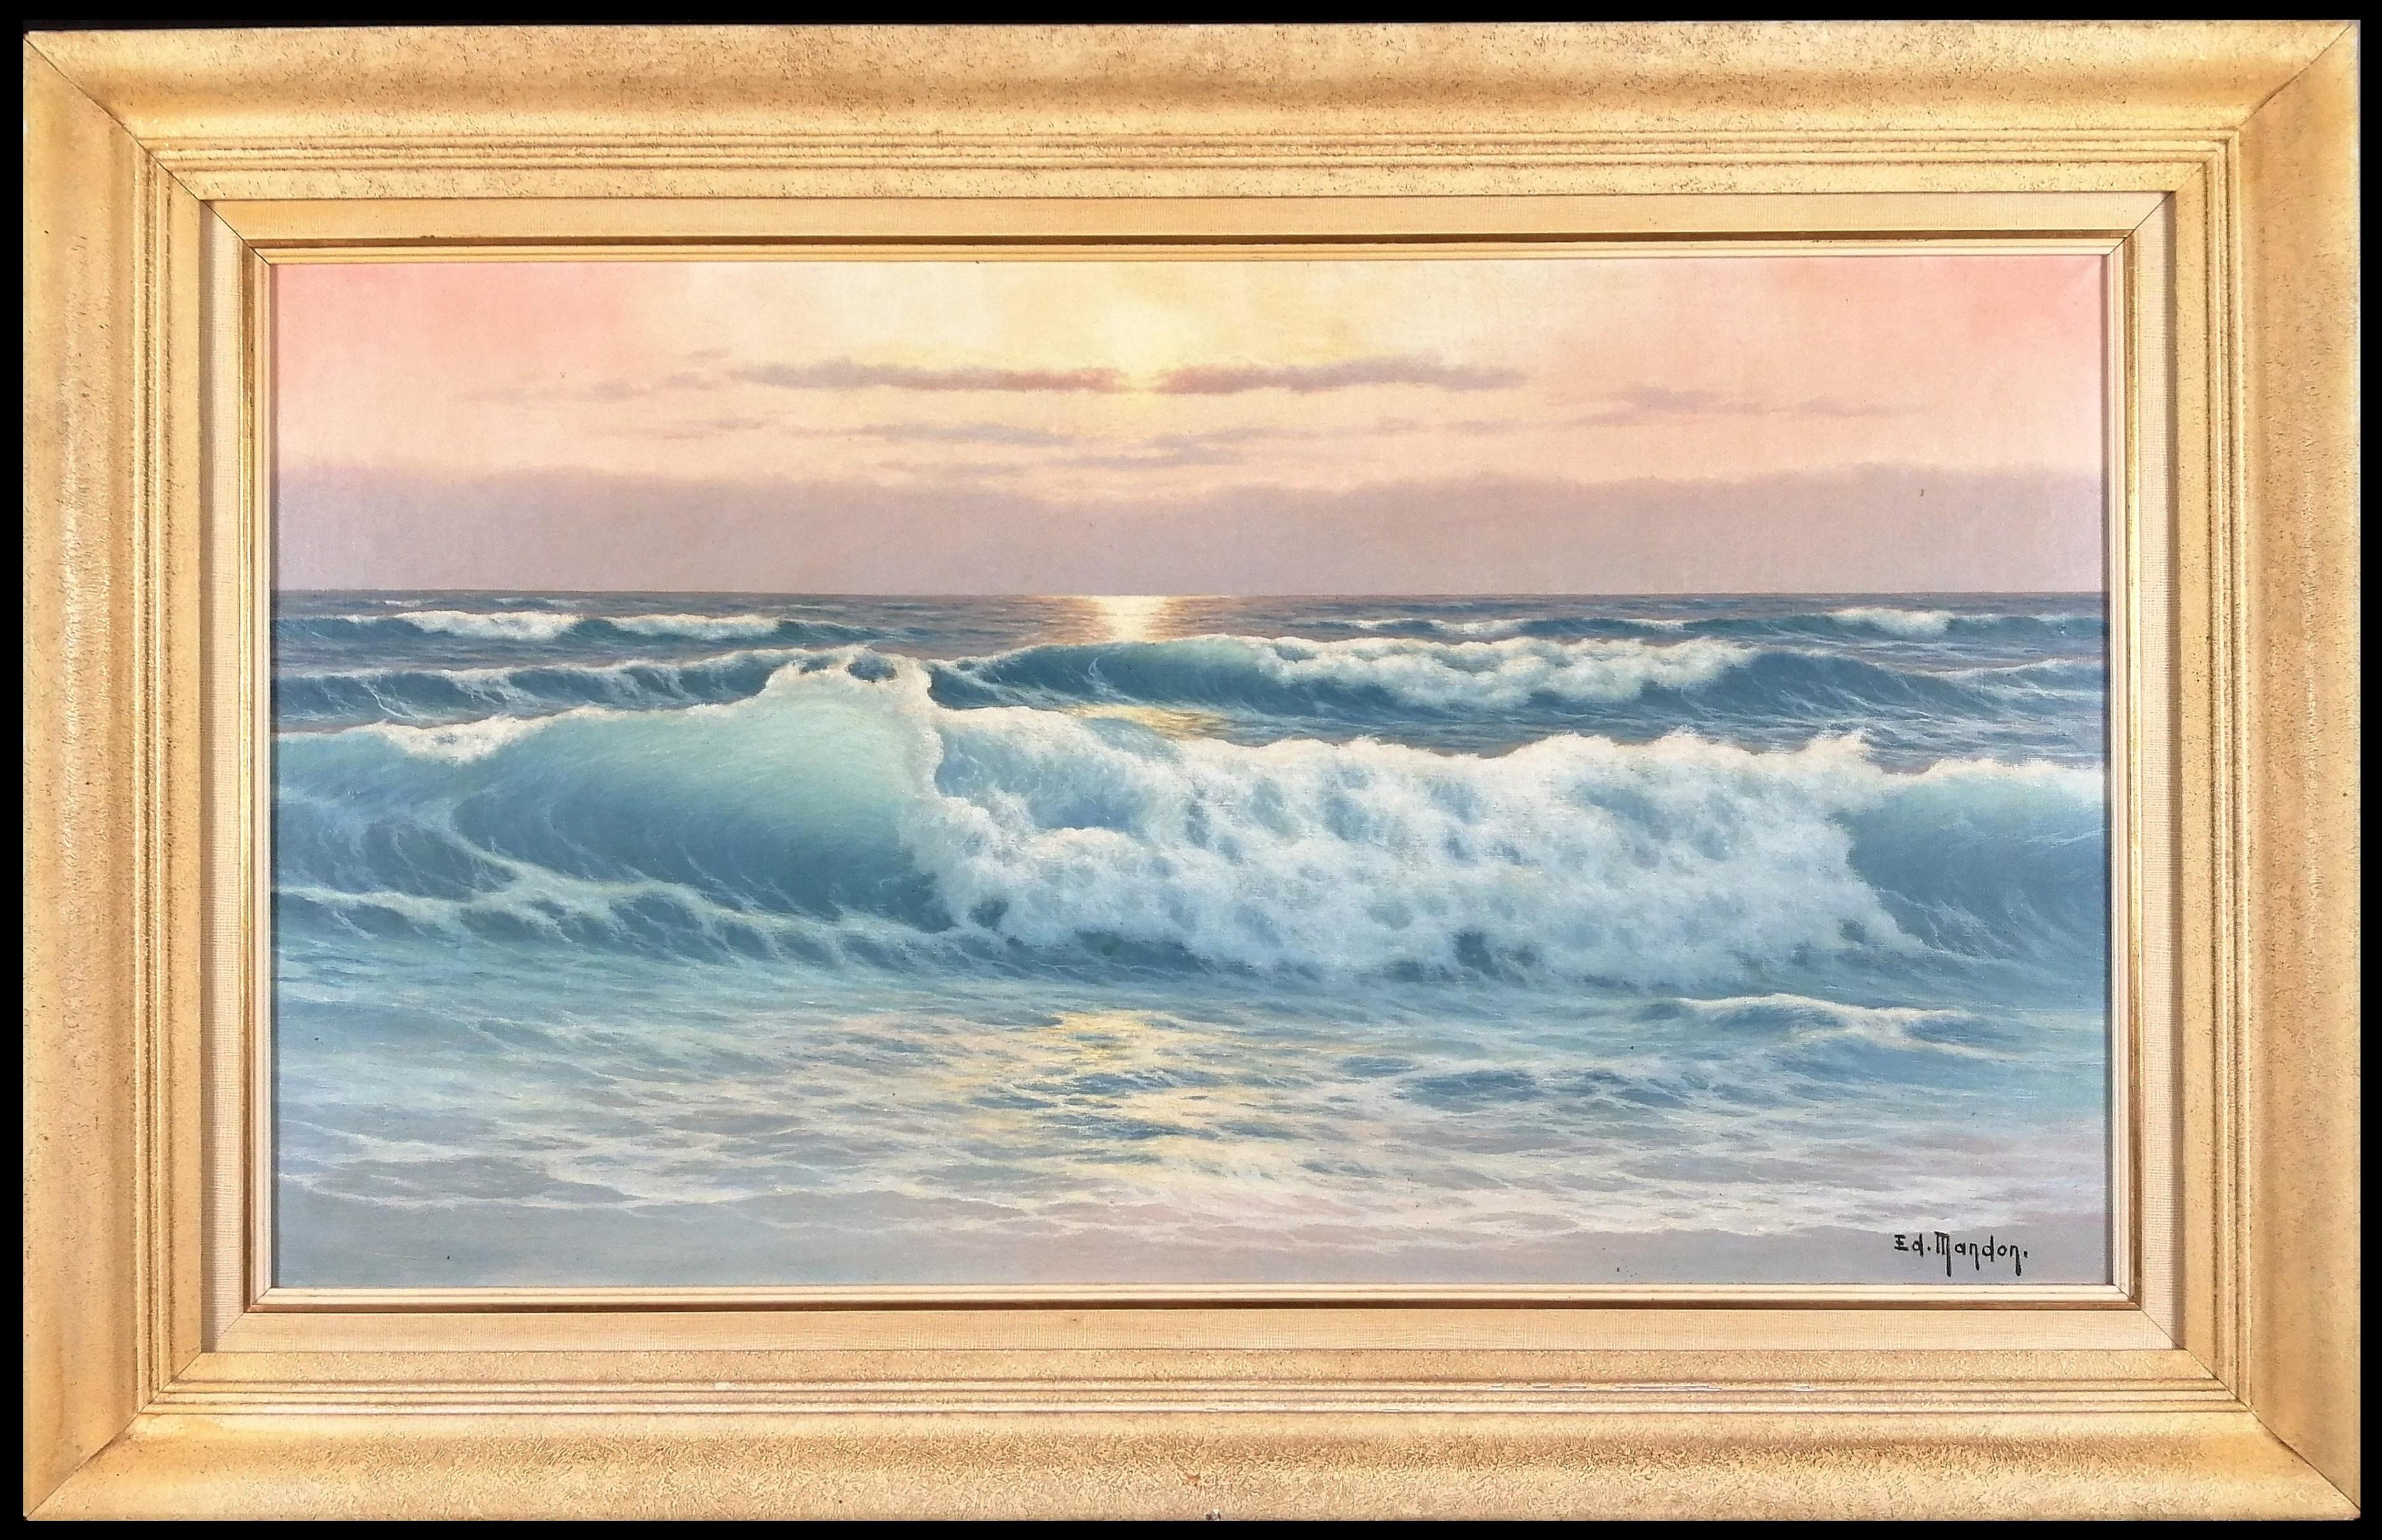 Edouard Mandon Landscape Painting - Sunset at Sea - Large French Marine Beach Seascape Oil on Canvas Painting